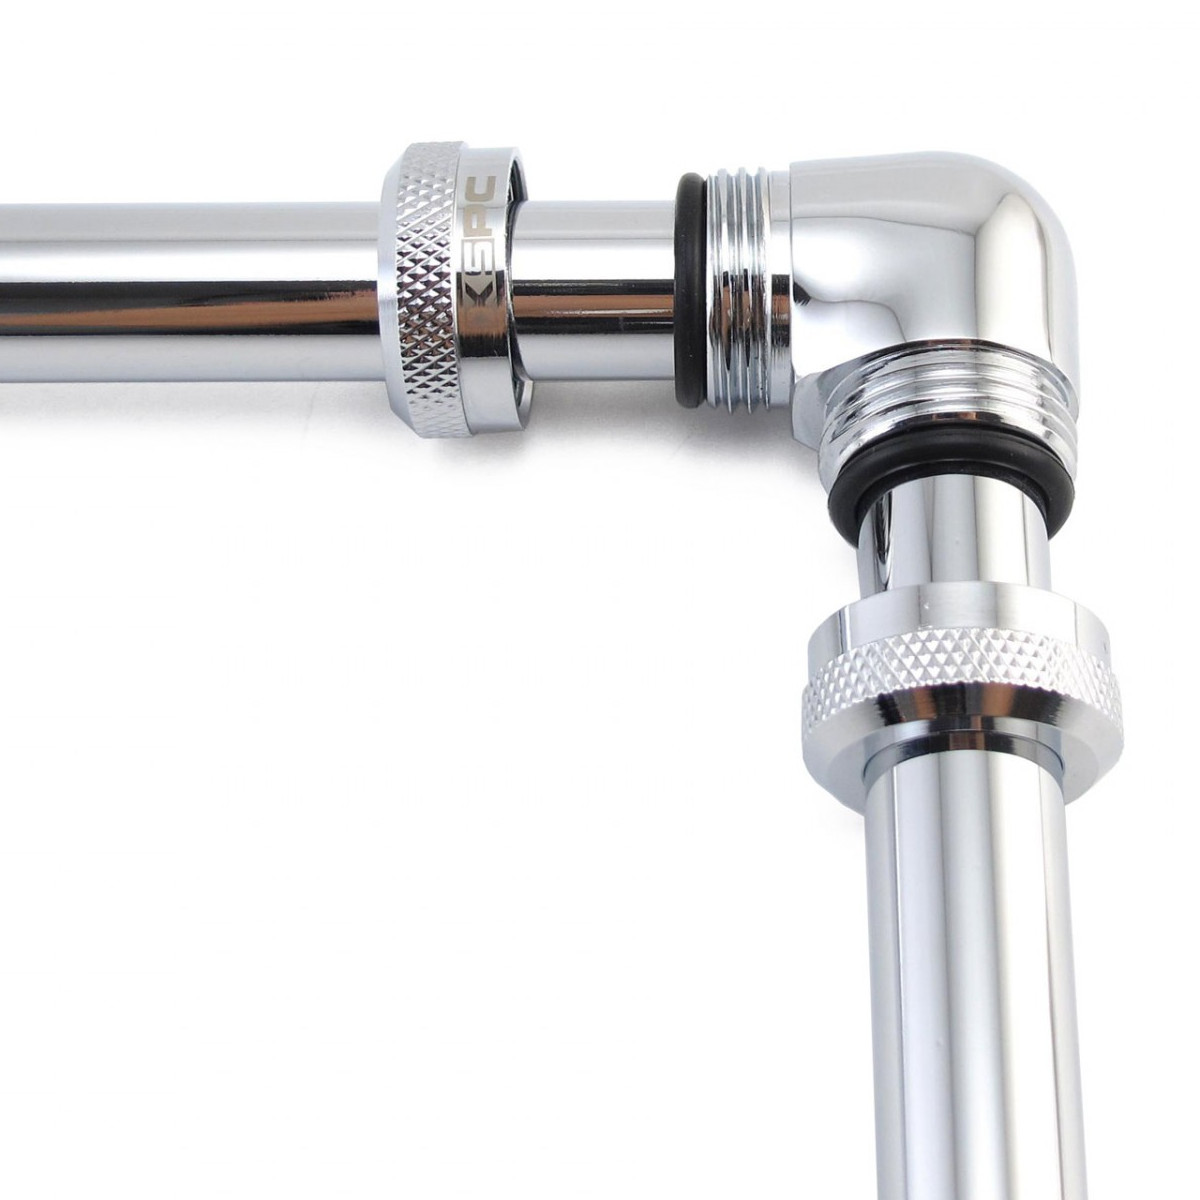 XSPC - XSPC 14mm Rigid Tubing Elbow Fitting (Chrome)